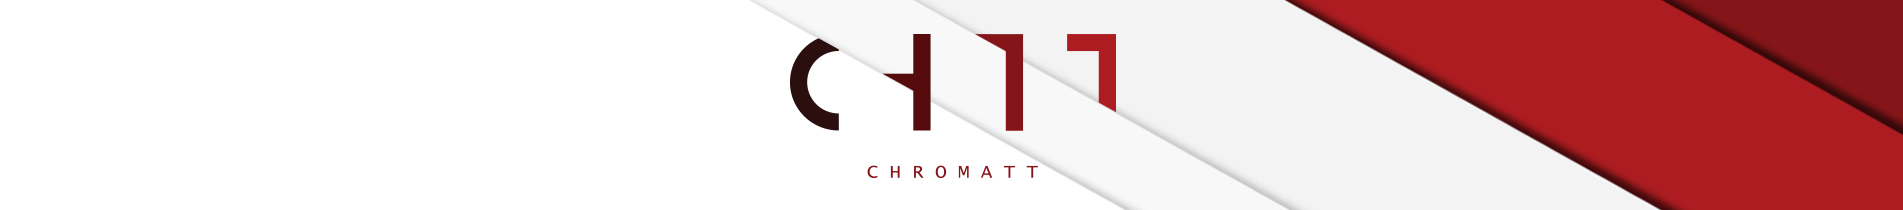 Chromatt Studio's profile banner